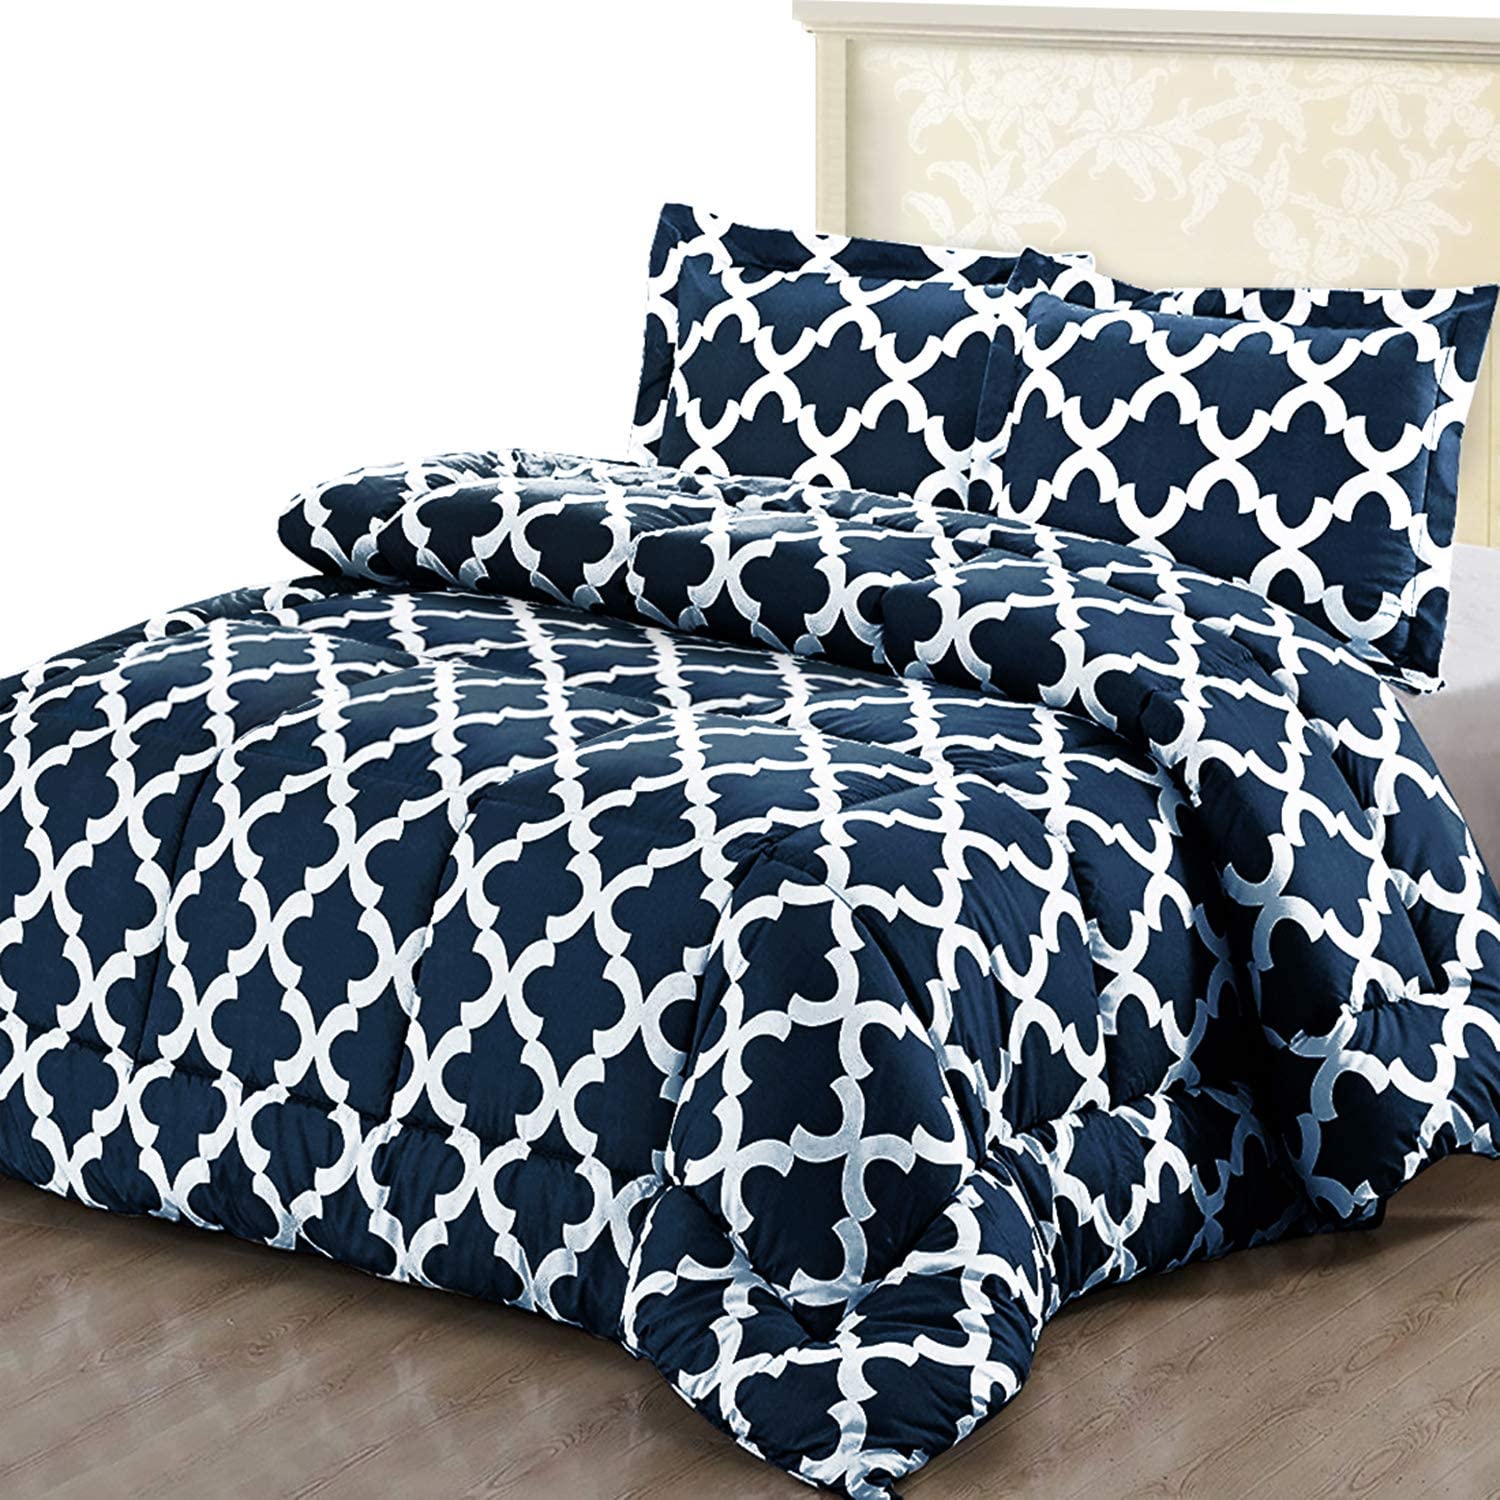 Utopia Bedding Printed Comforter Set Grey, King with 2 Pillow Shams 